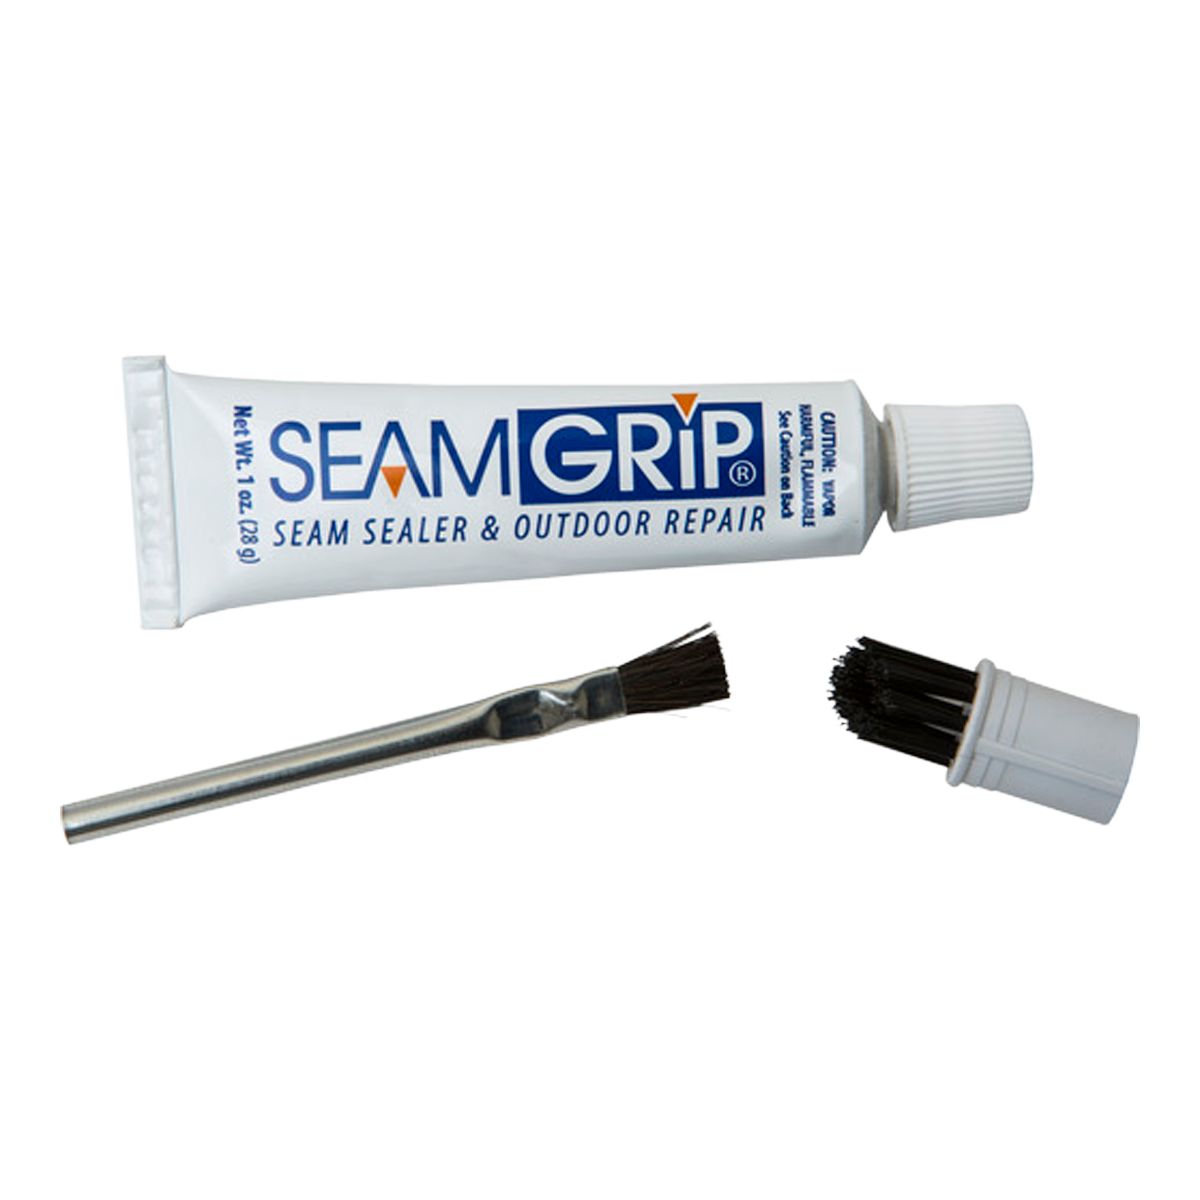 Image of Gear Aid Seam Grip